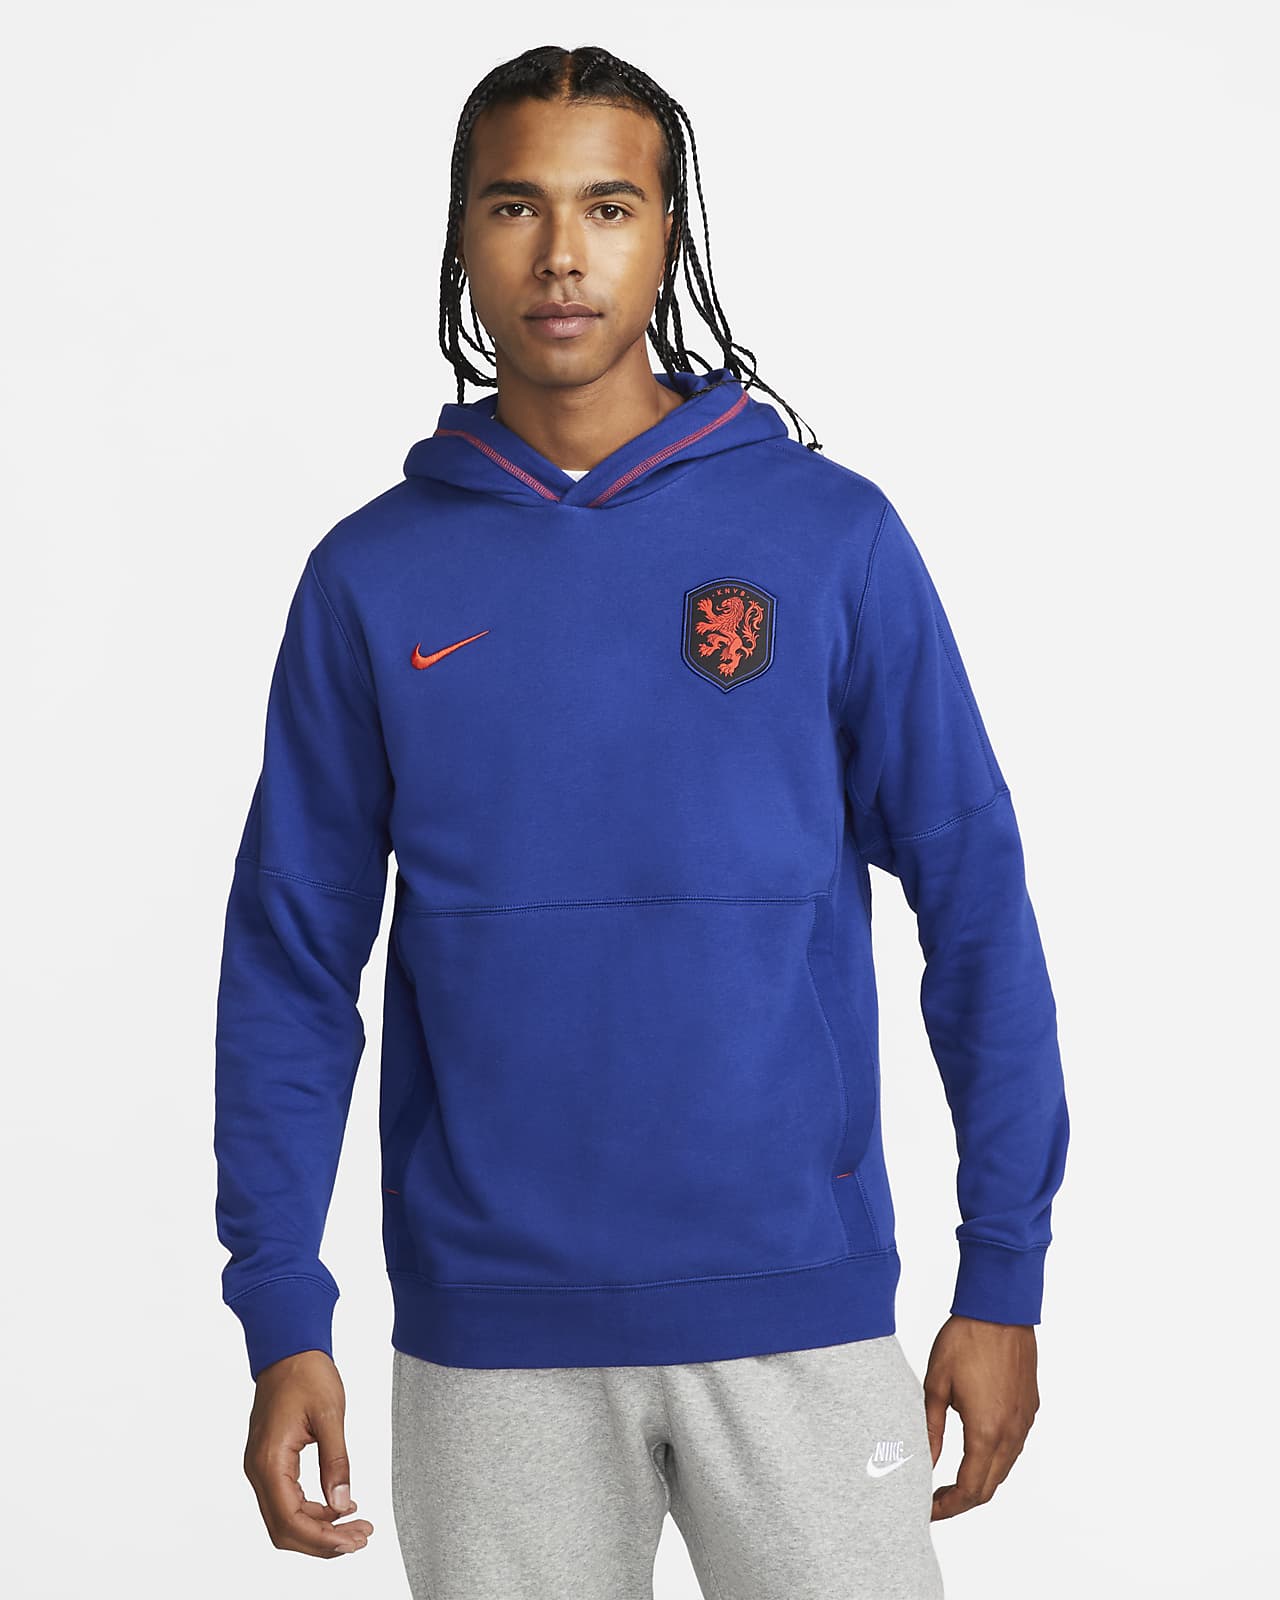 alondra Ídolo Rancio Netherlands Men's French Terry Football Hoodie. Nike LU